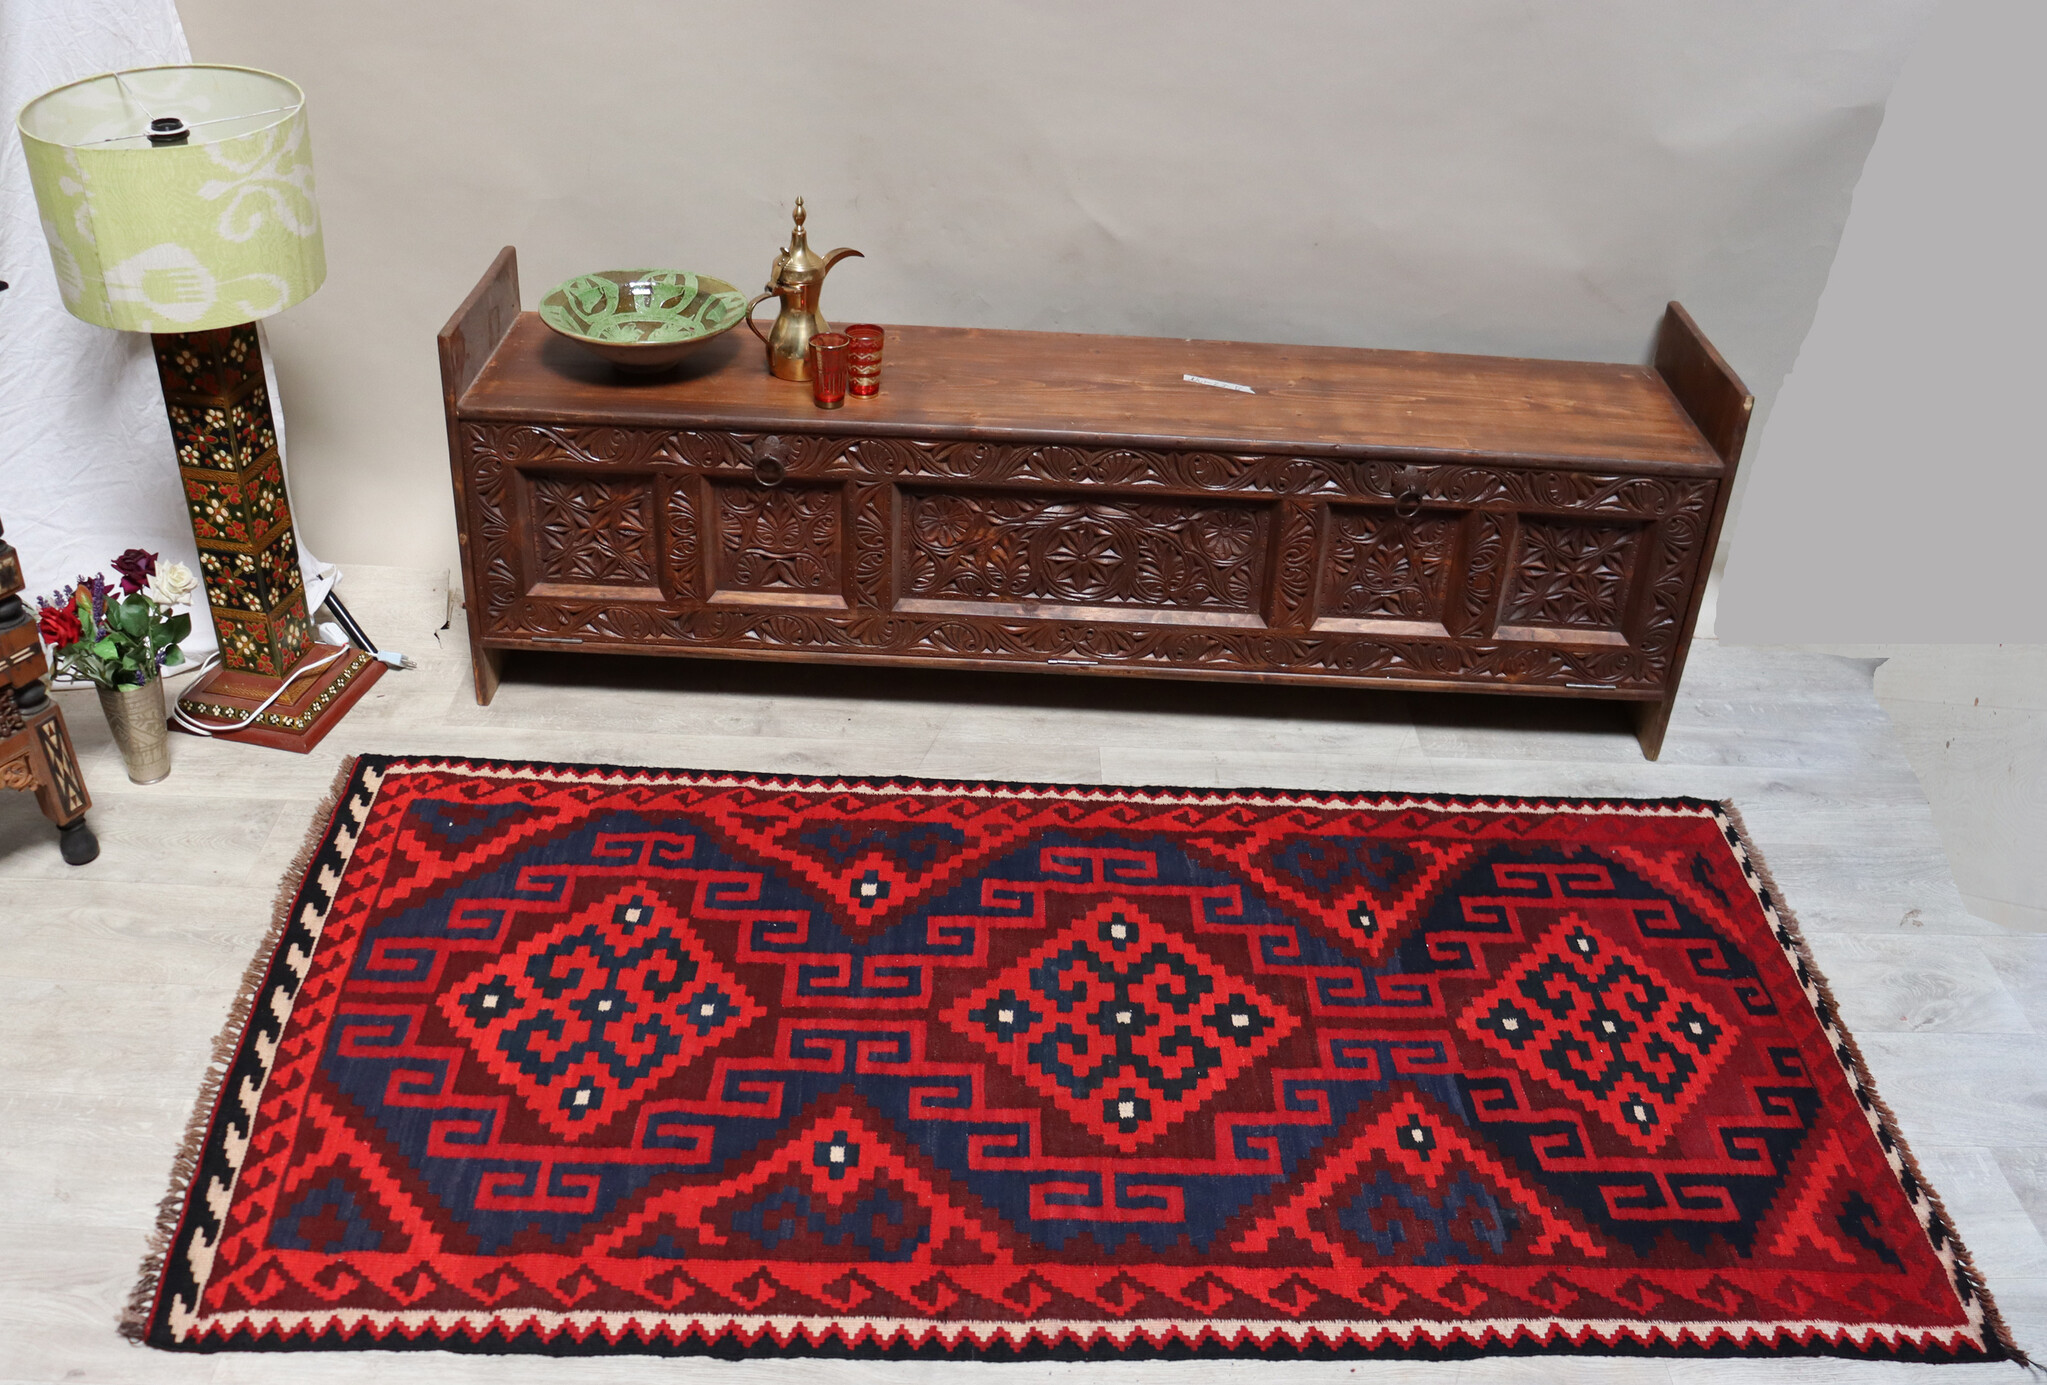 201x101 cm Afghan   nomadic Kilim rug  No:166